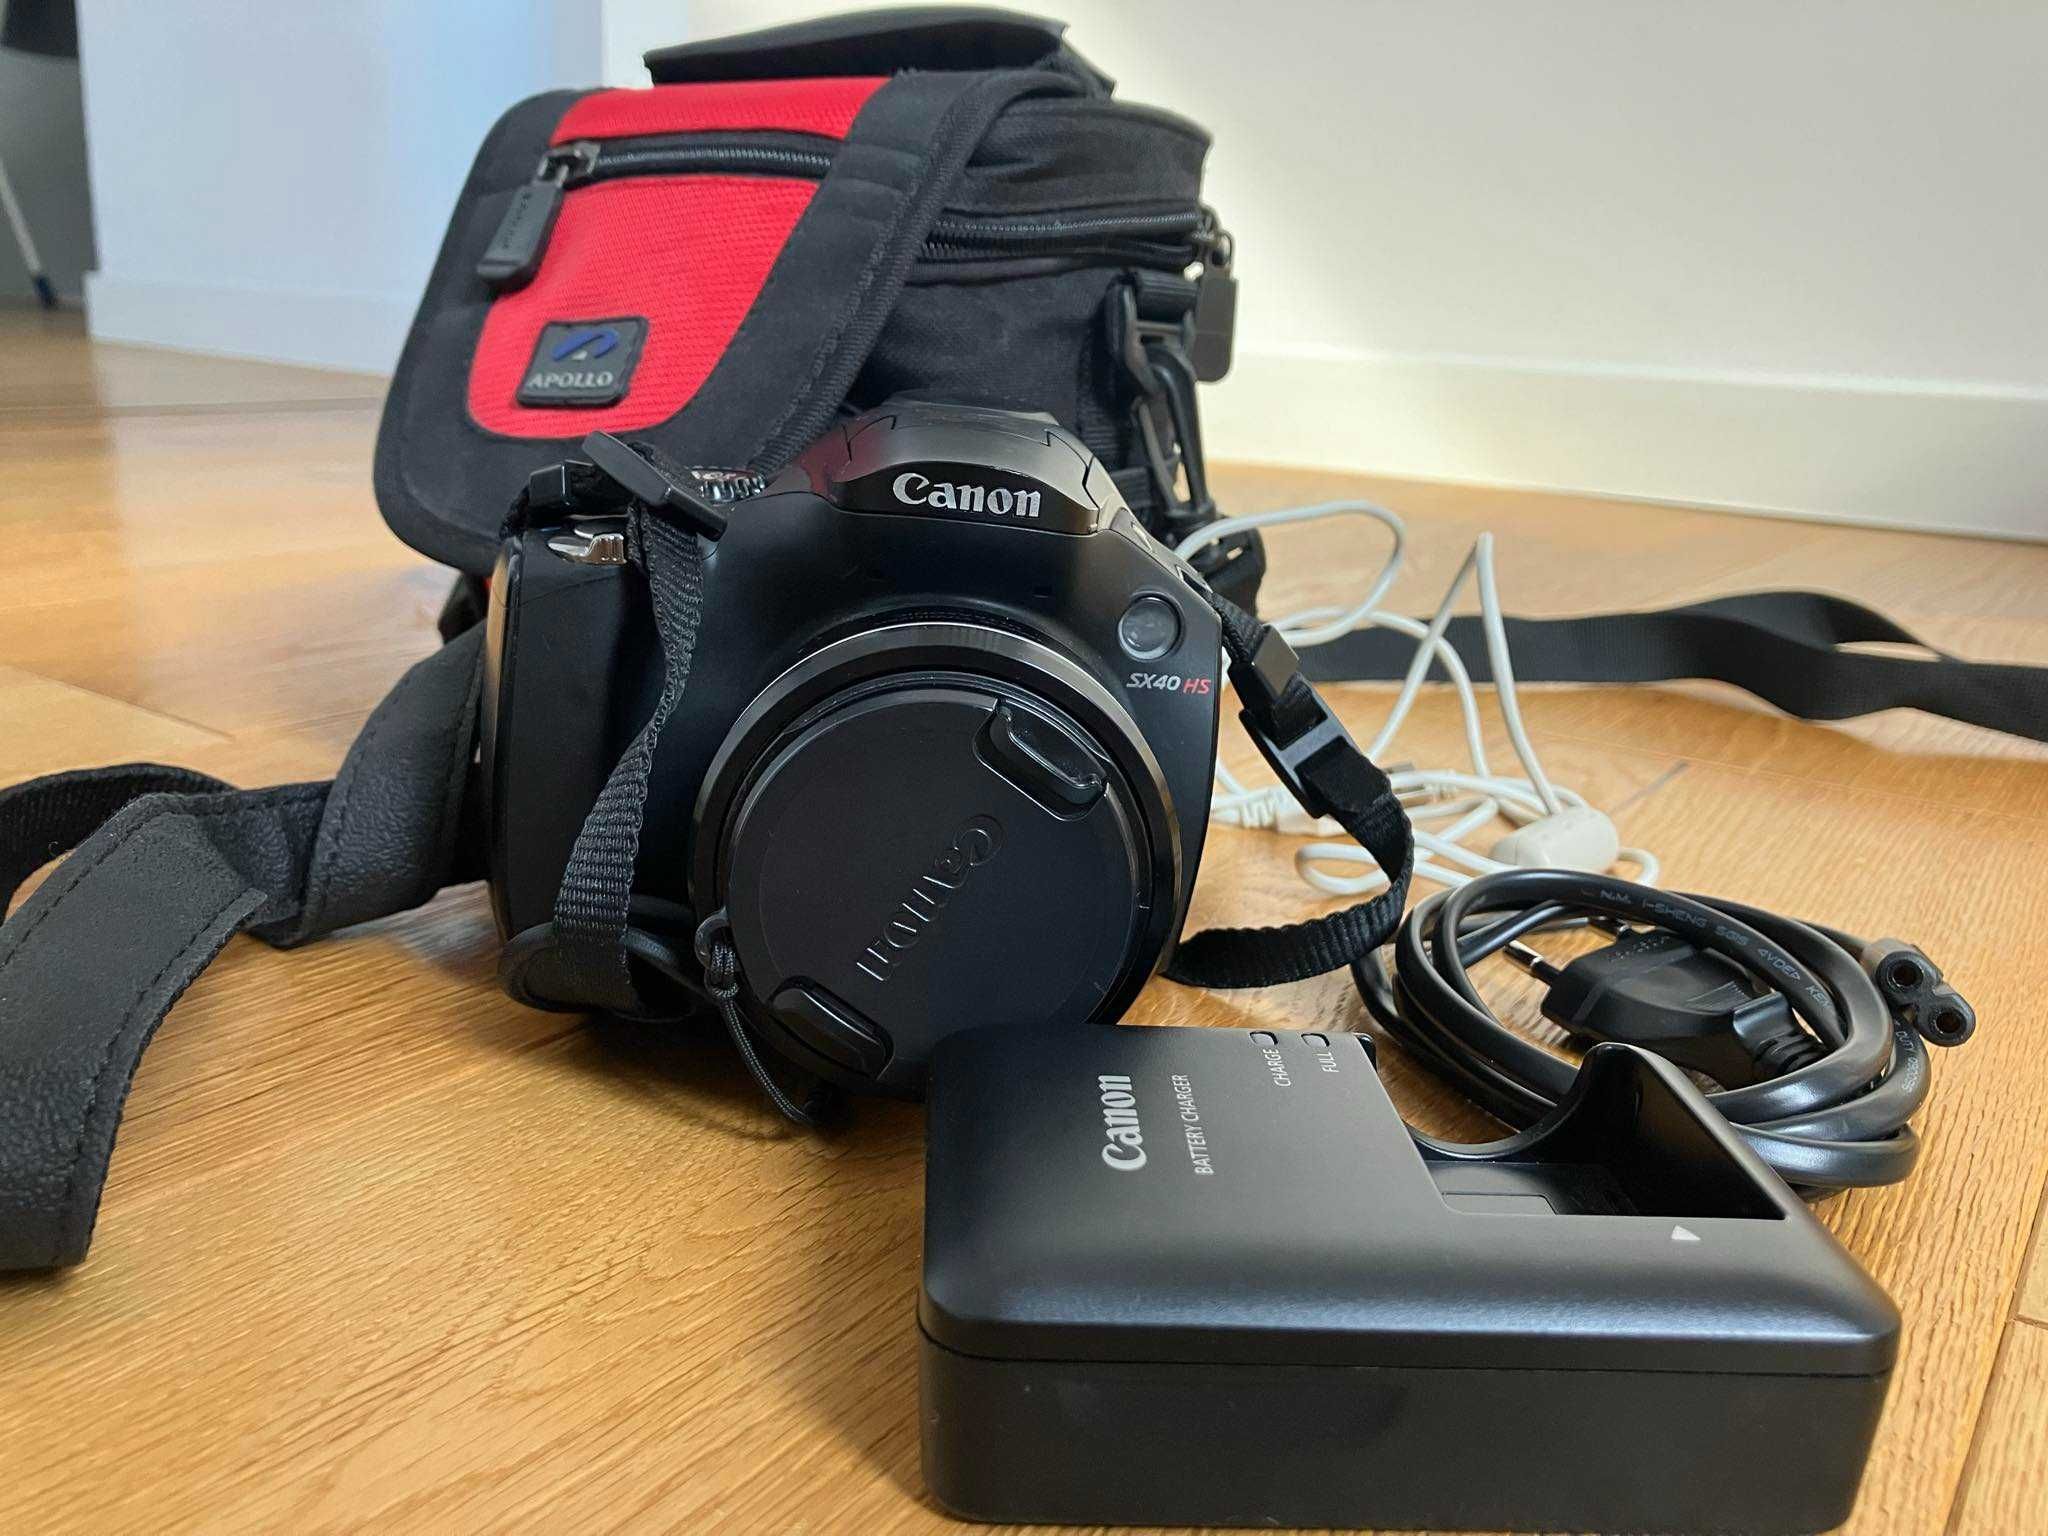 Canon PowerShot SX 40 HS sx40 kompaktowy aparat torba ładowarka